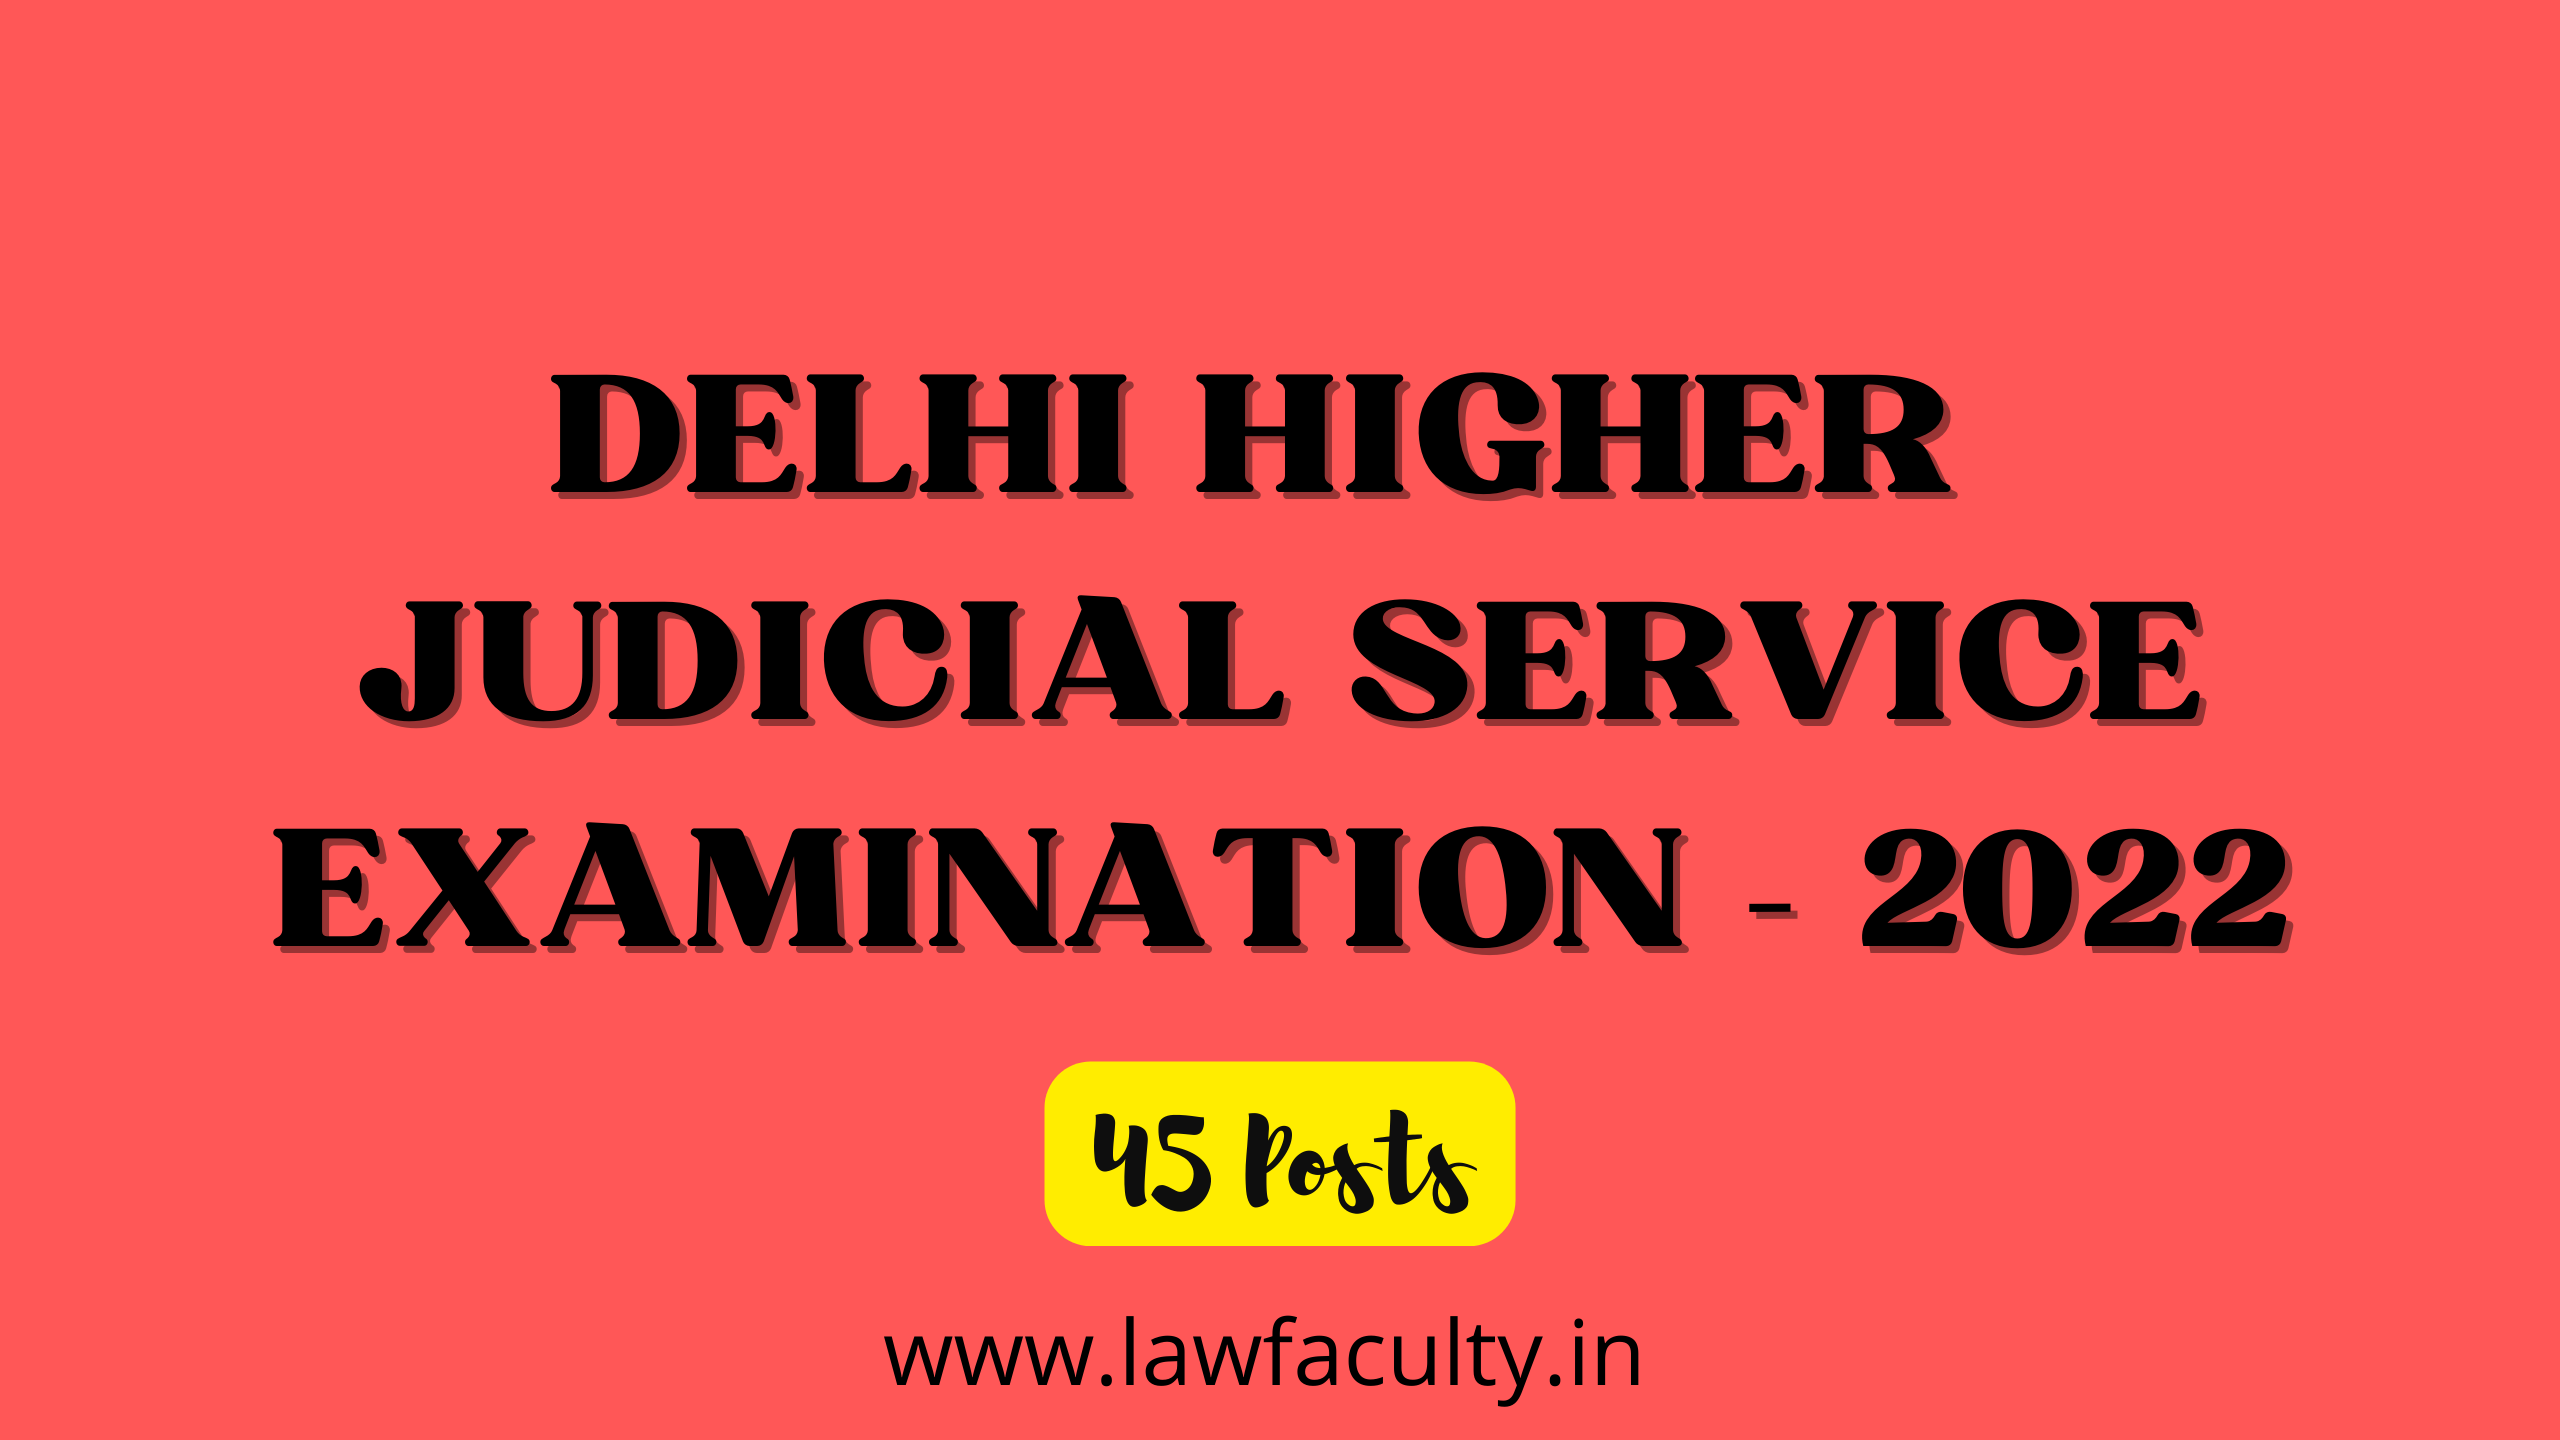 DELHI HIGHER JUDICIAL SERVICE EXAMINATION – 2022